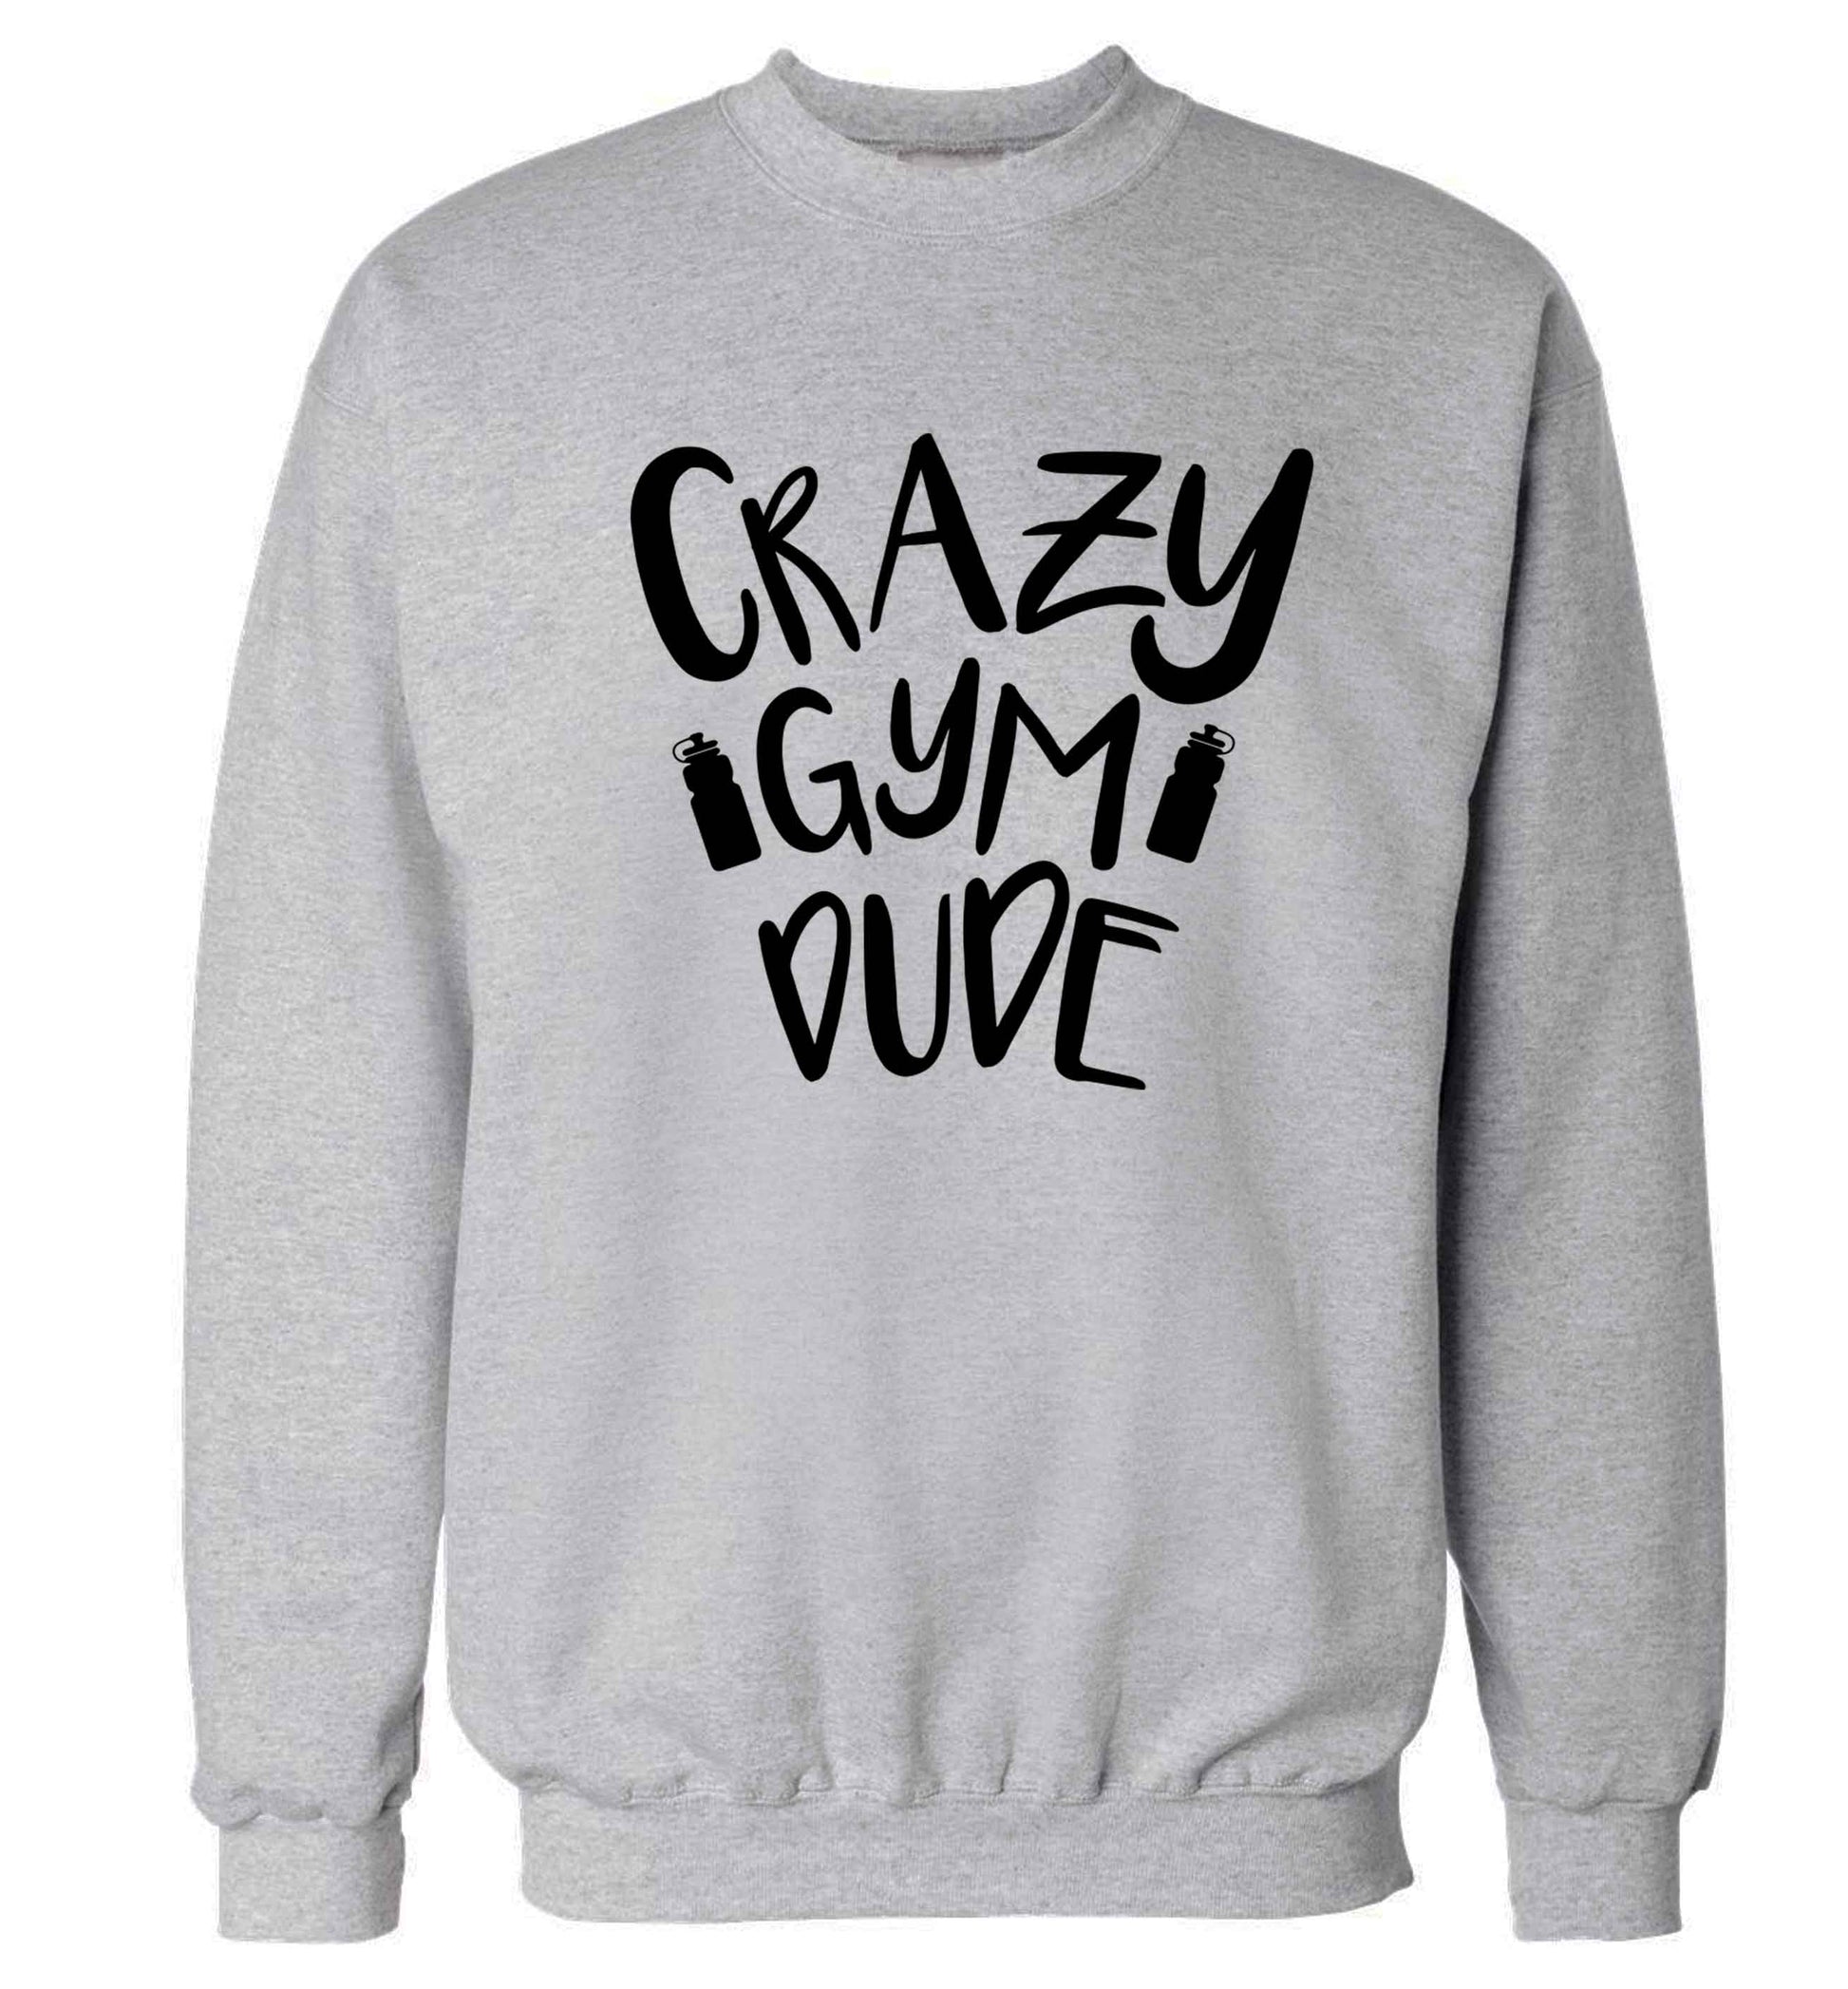 Crazy gym dude Adult's unisex grey Sweater 2XL